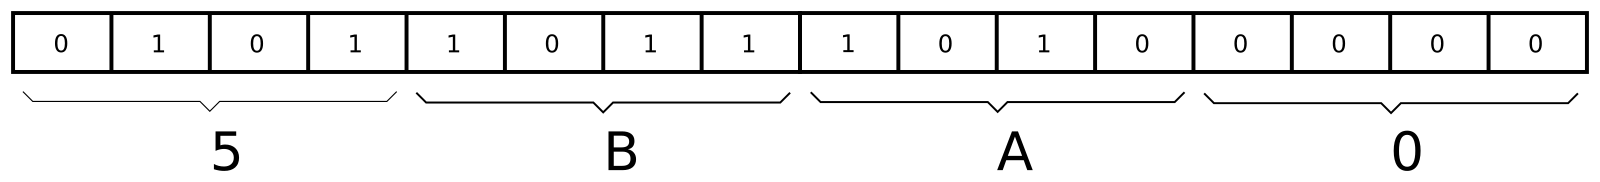 Figure : Conversion binaire-hexadécimal